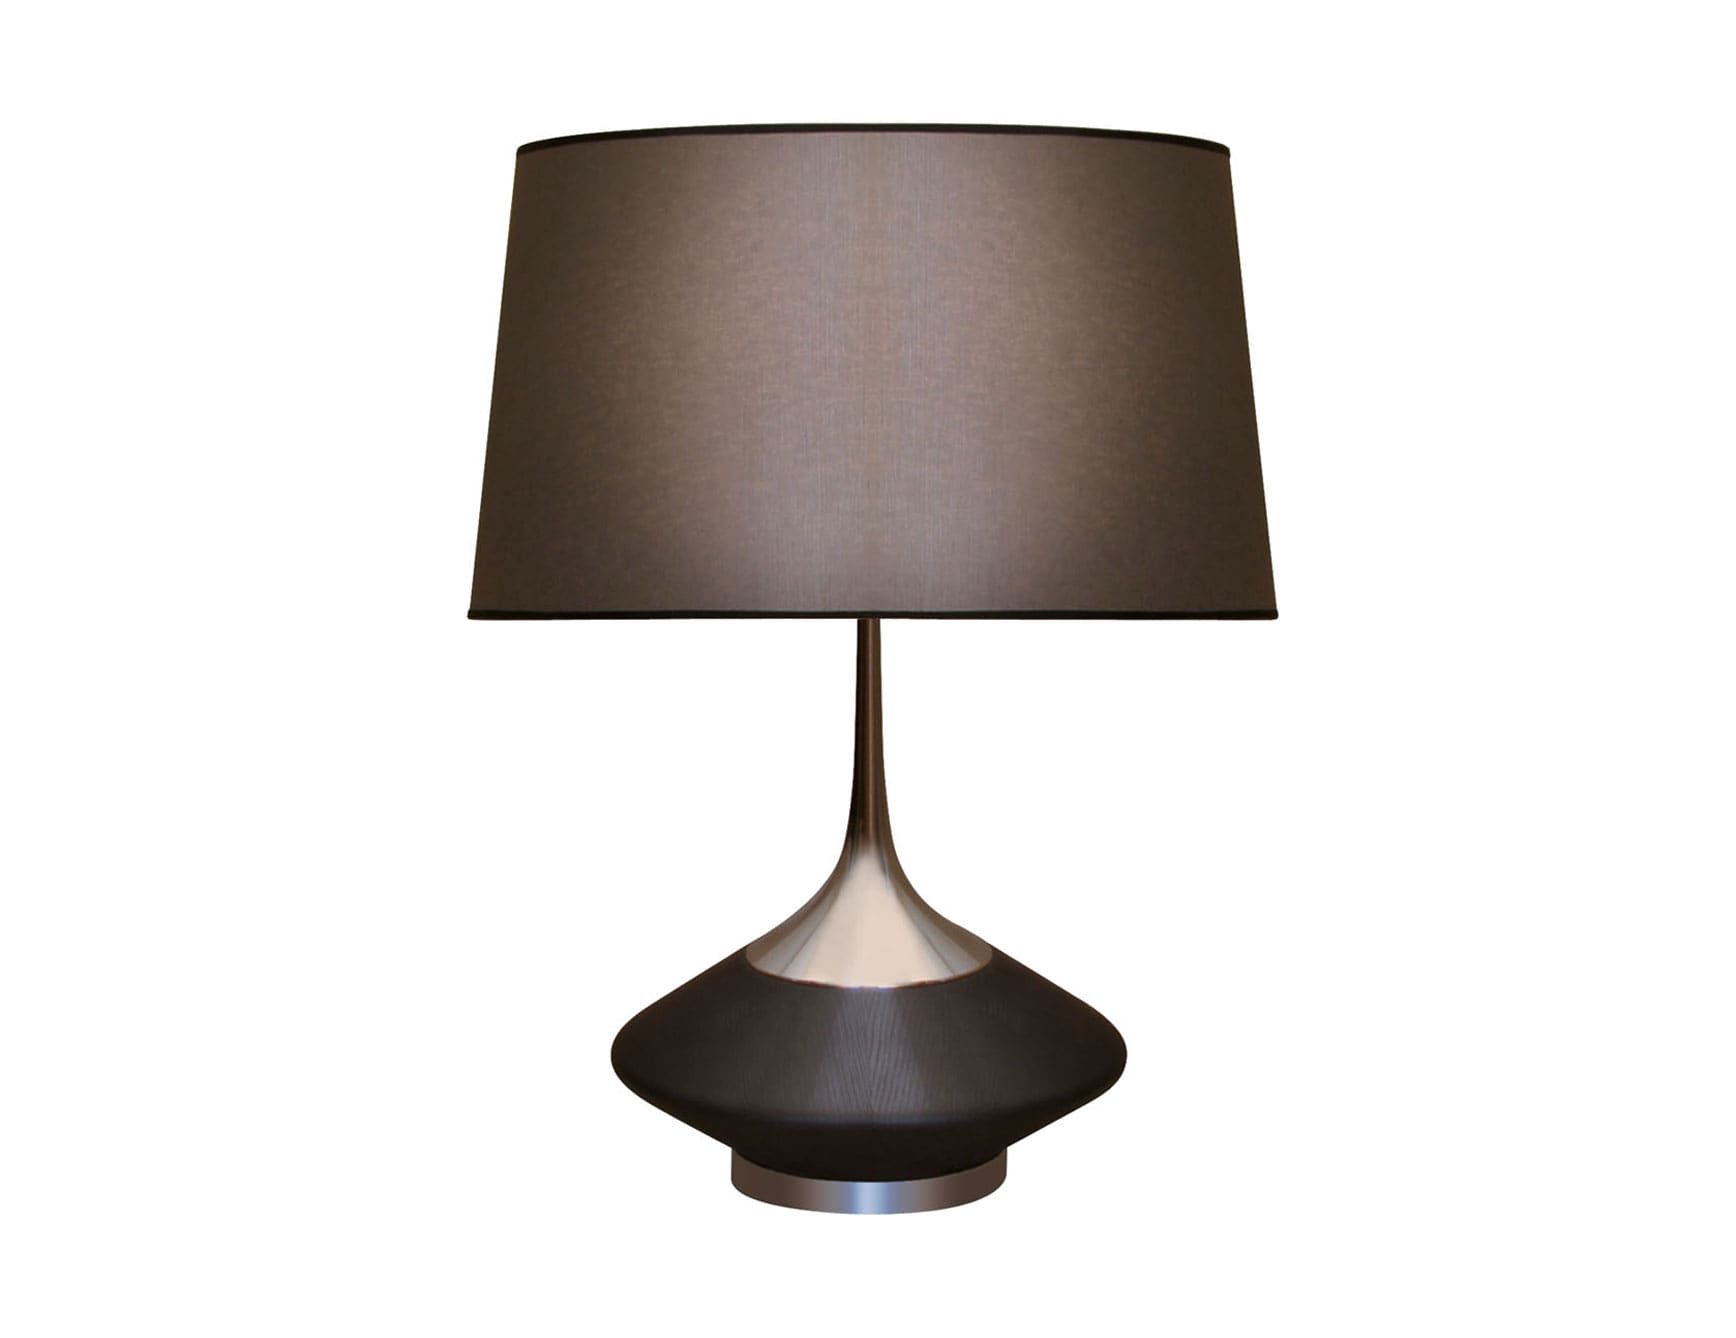 Vuvu modern Italian table lamp with black Oak wood